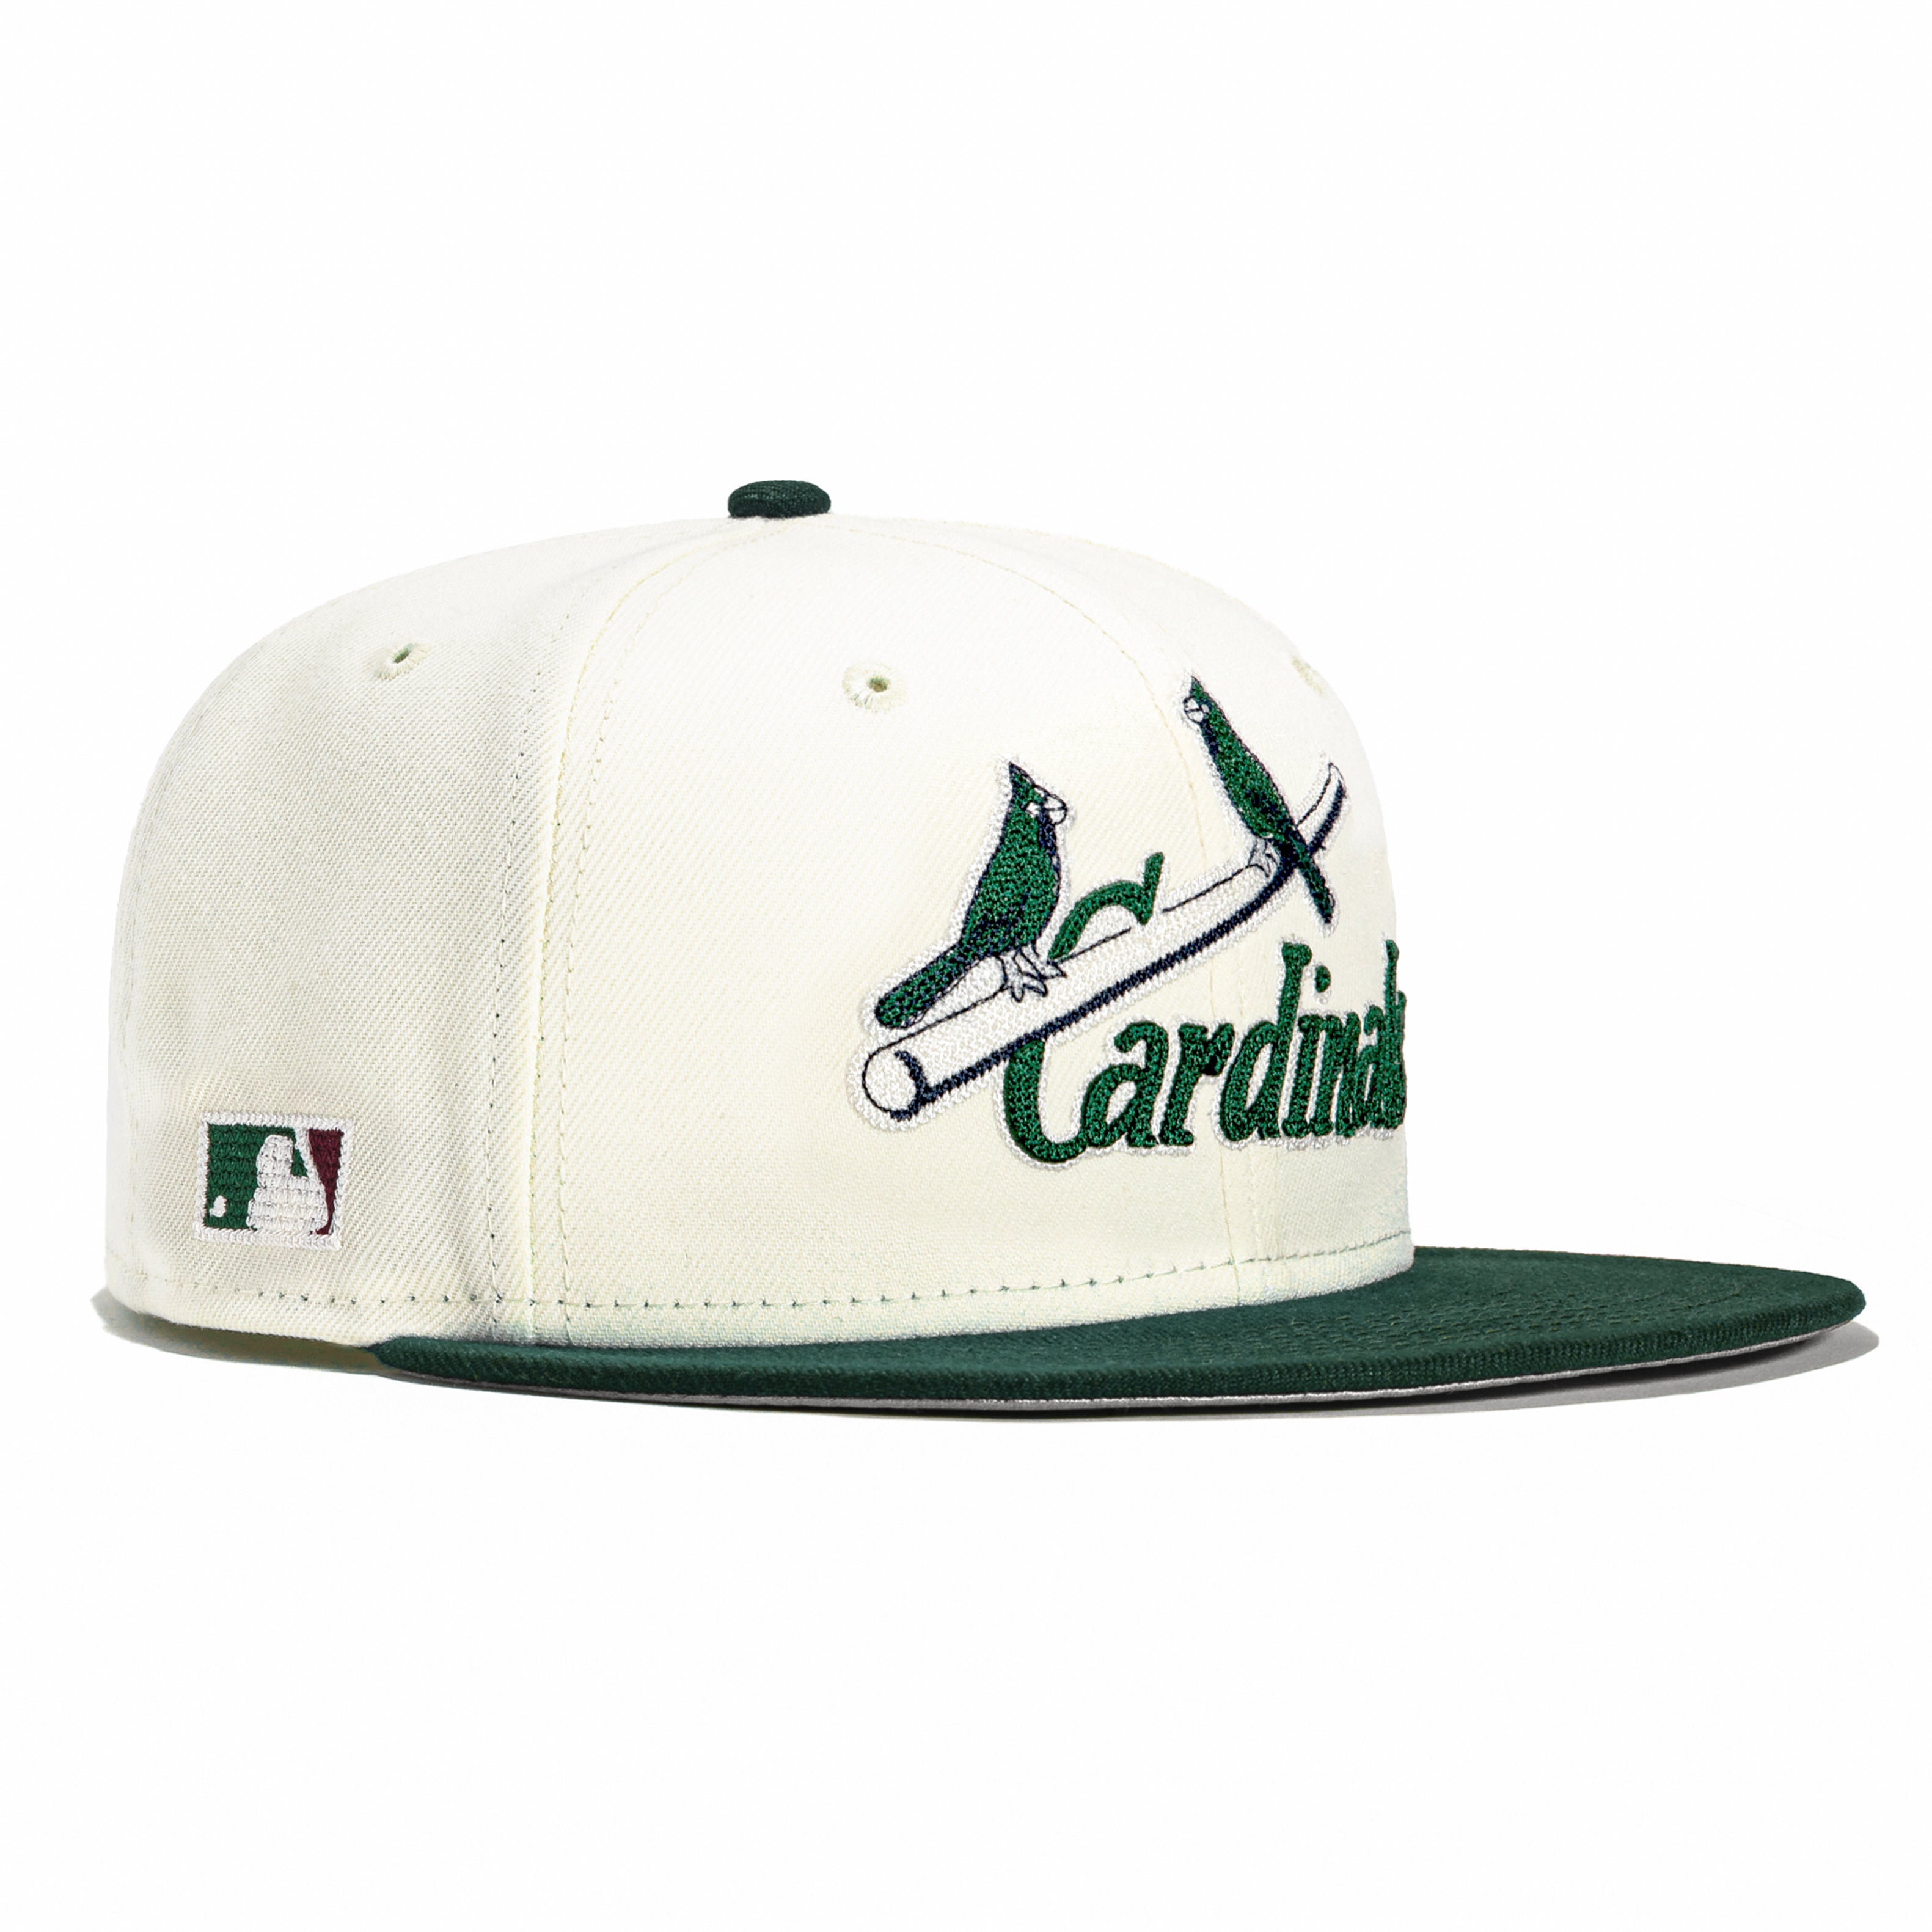 New Era 59FIFTY Chain Stitch St Louis Cardinals Hat - White, Green White/Green / 7 7/8